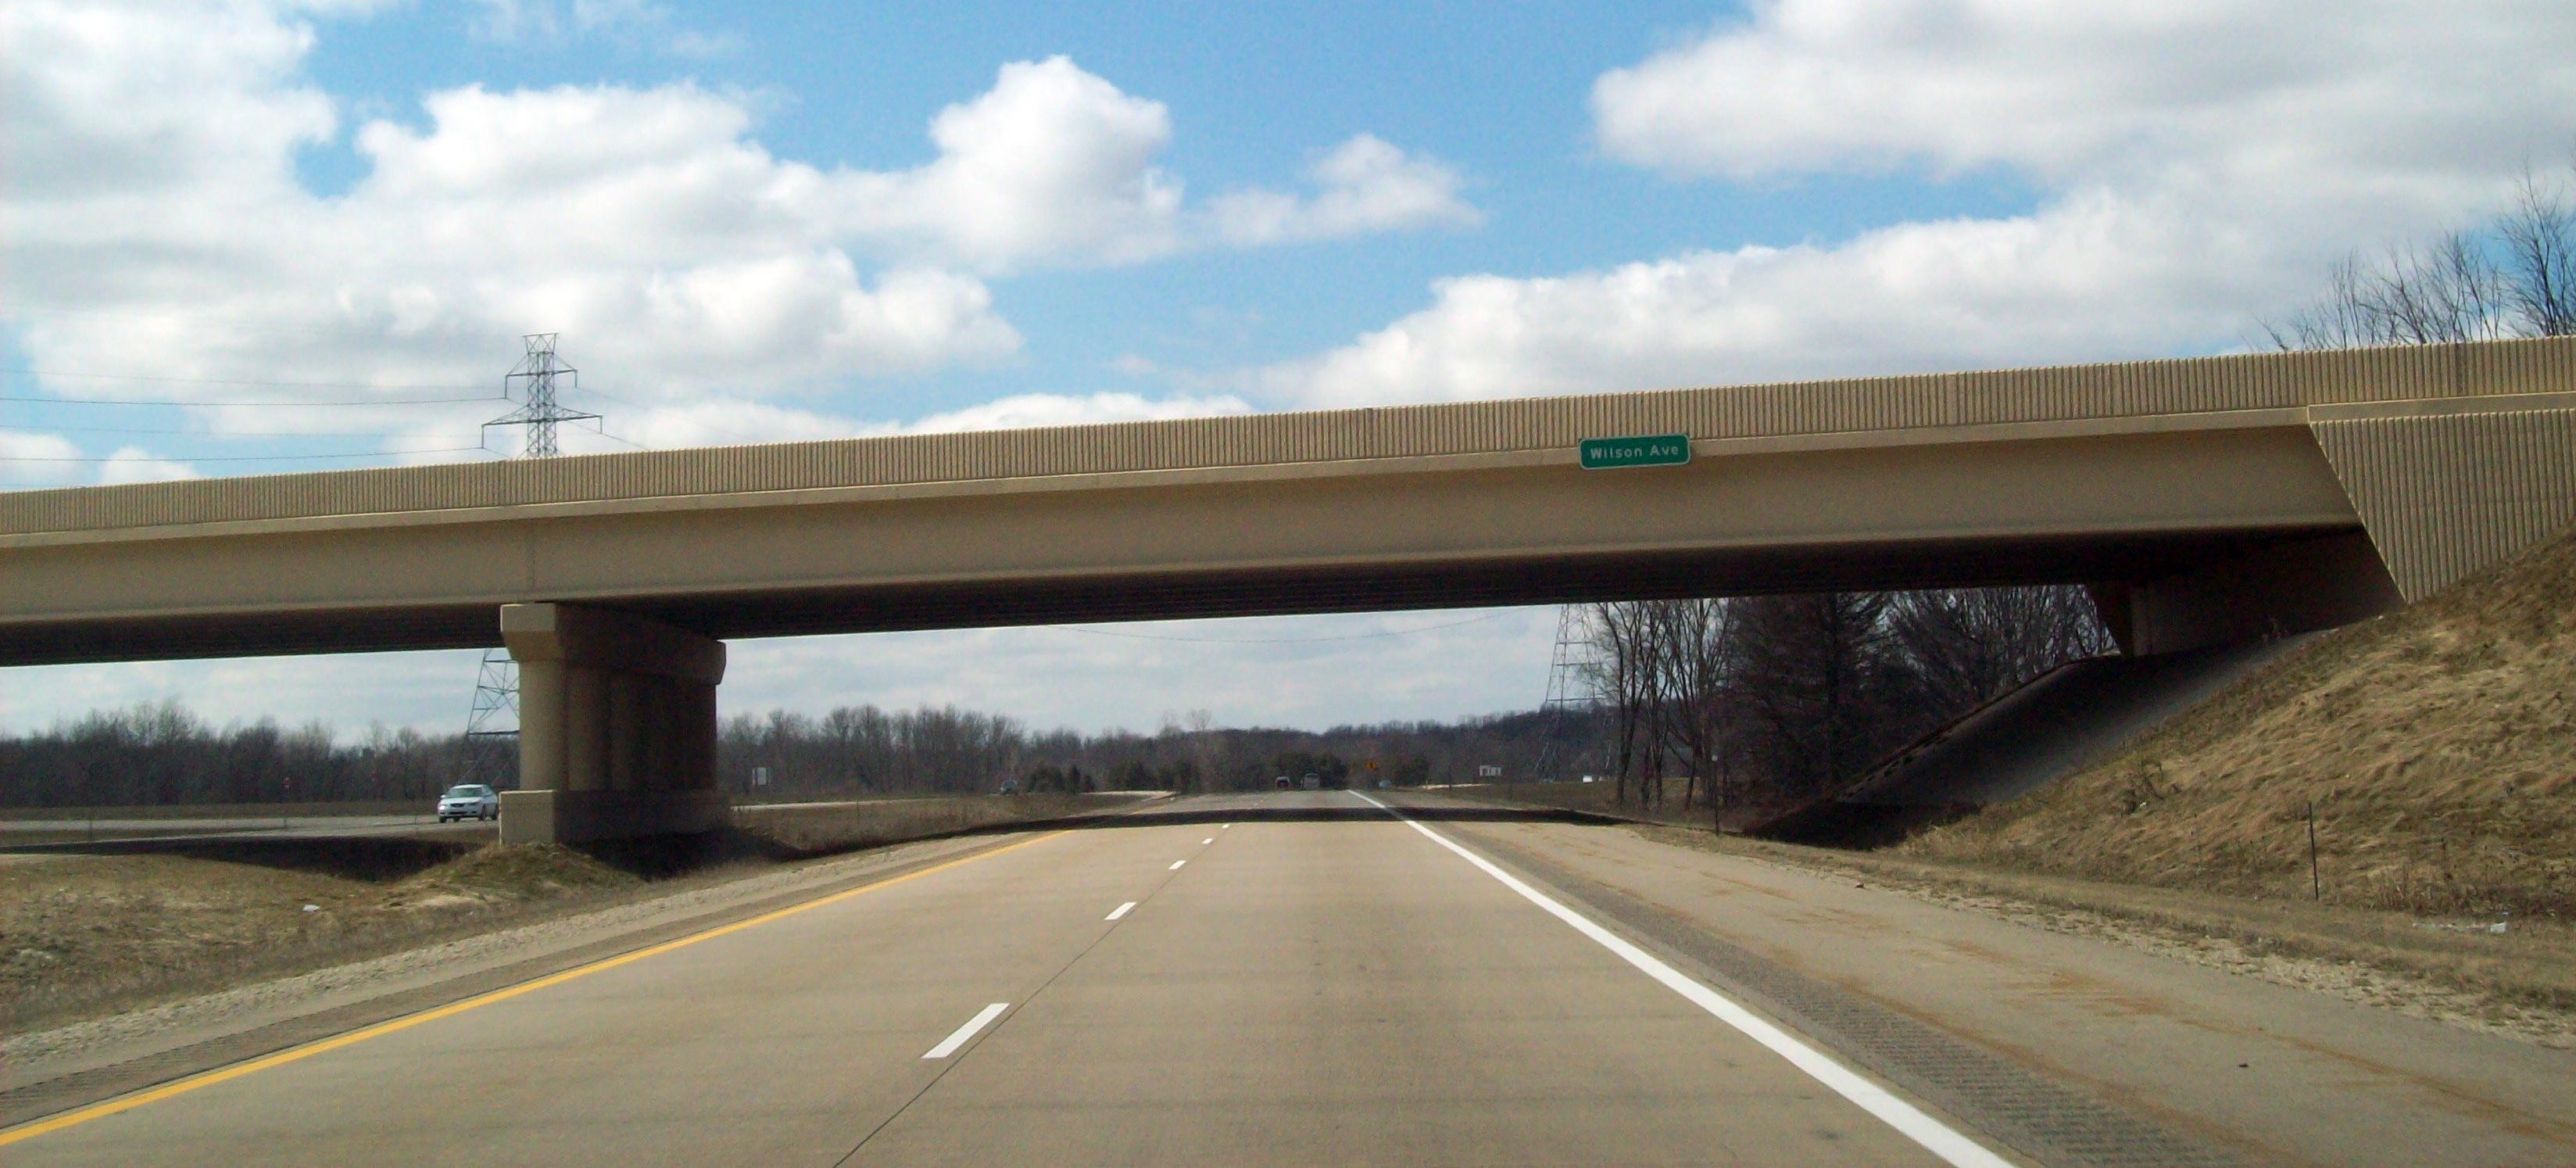 File:Wilson Avenue overpass.jpg - Wikimedia Commons